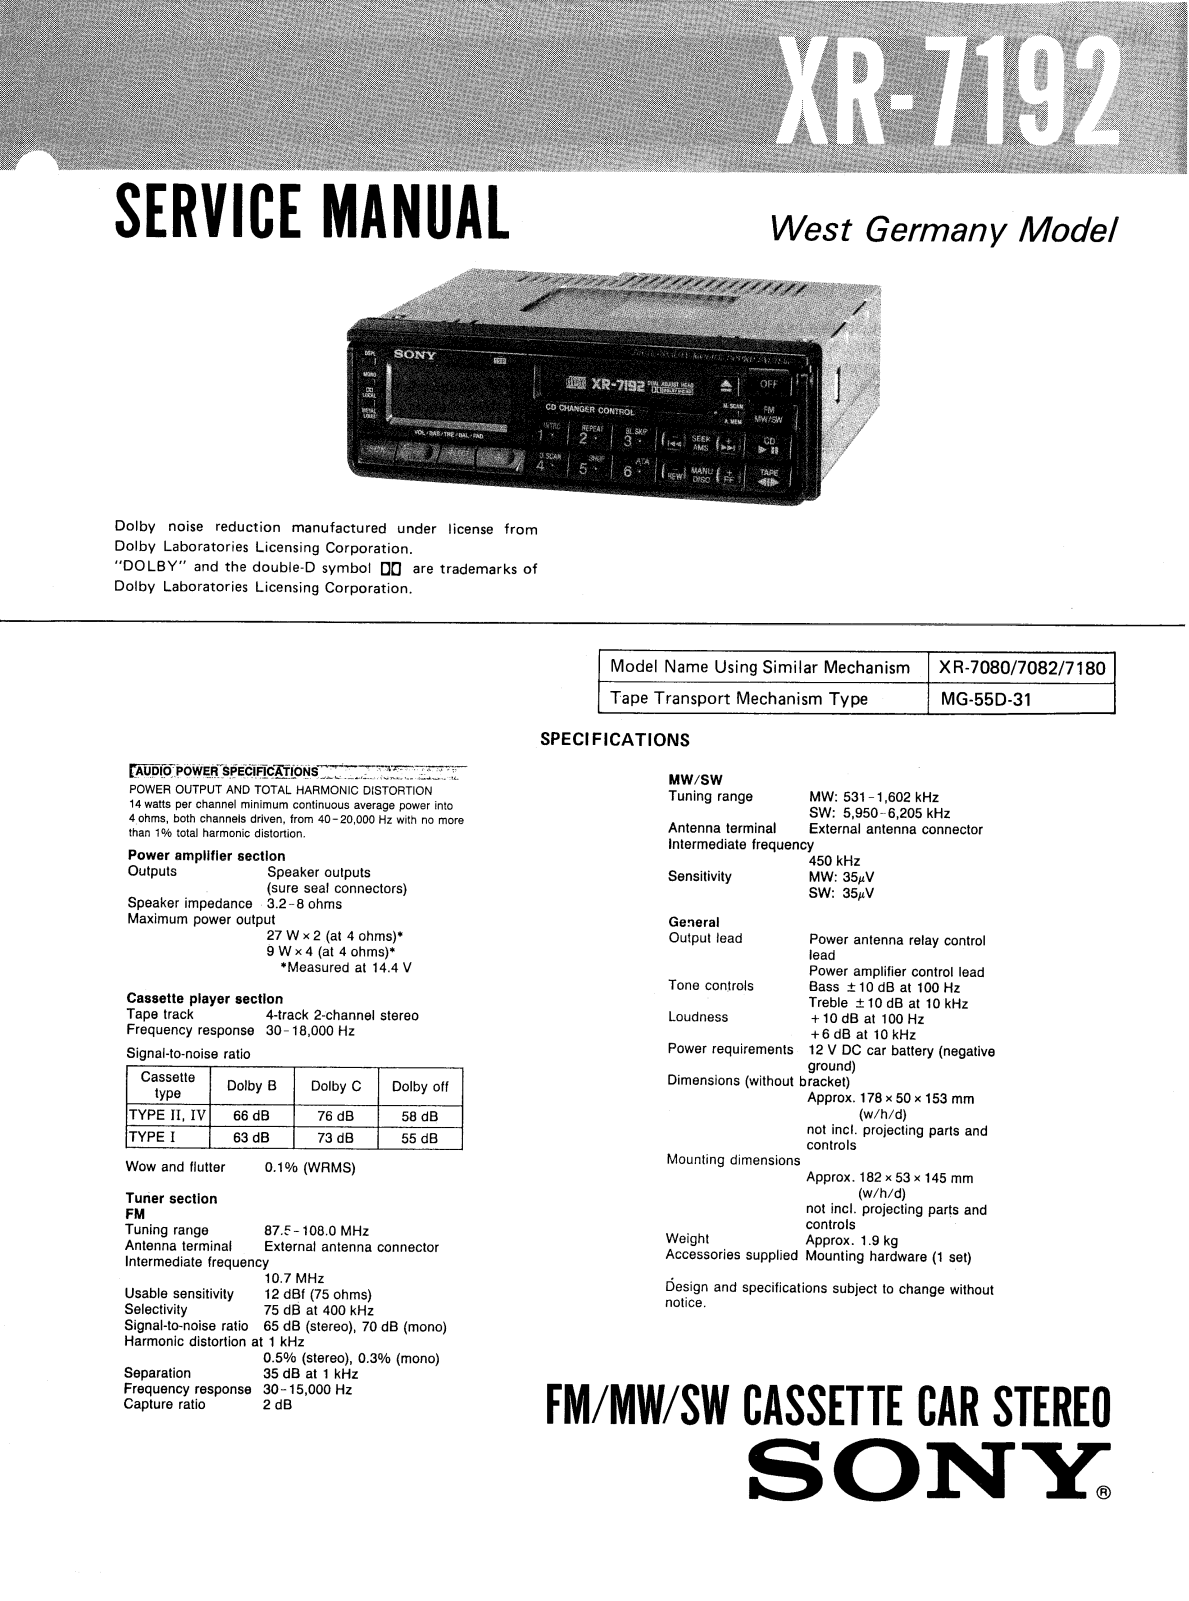 Sony XR-7192 Service manual